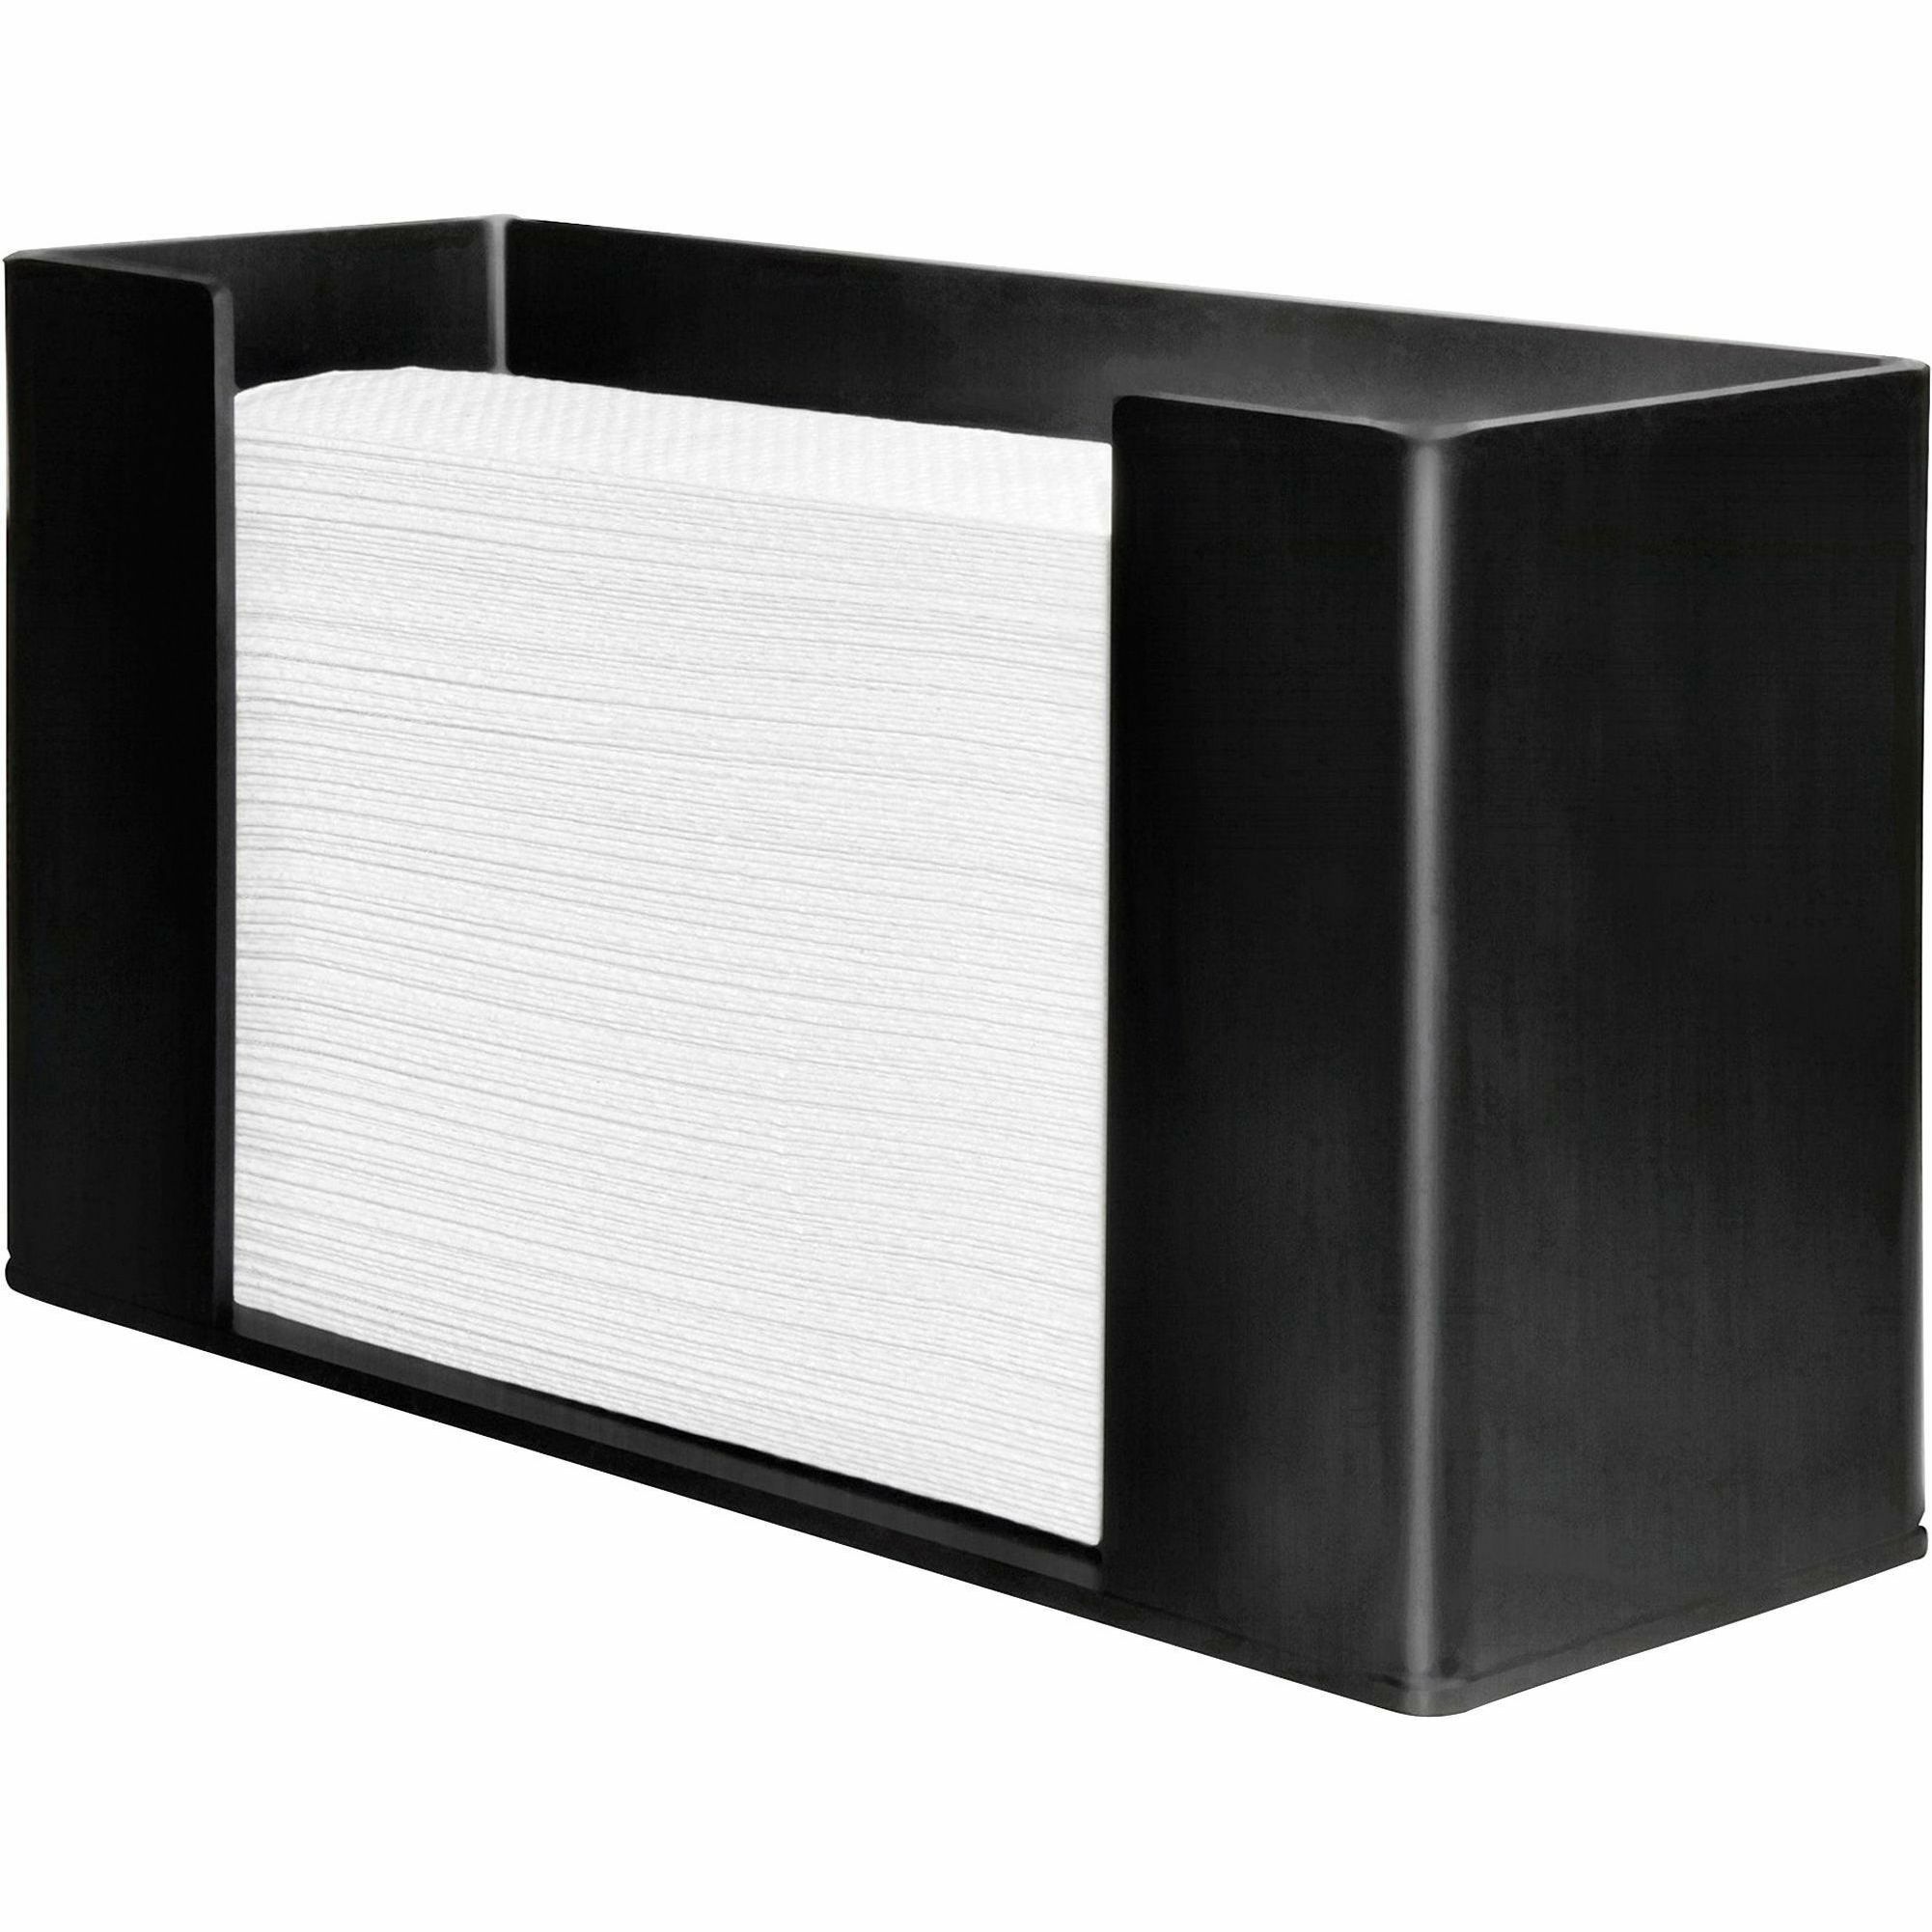 Genuine Joe Folded Paper Towel Dispenser | JD Office Products